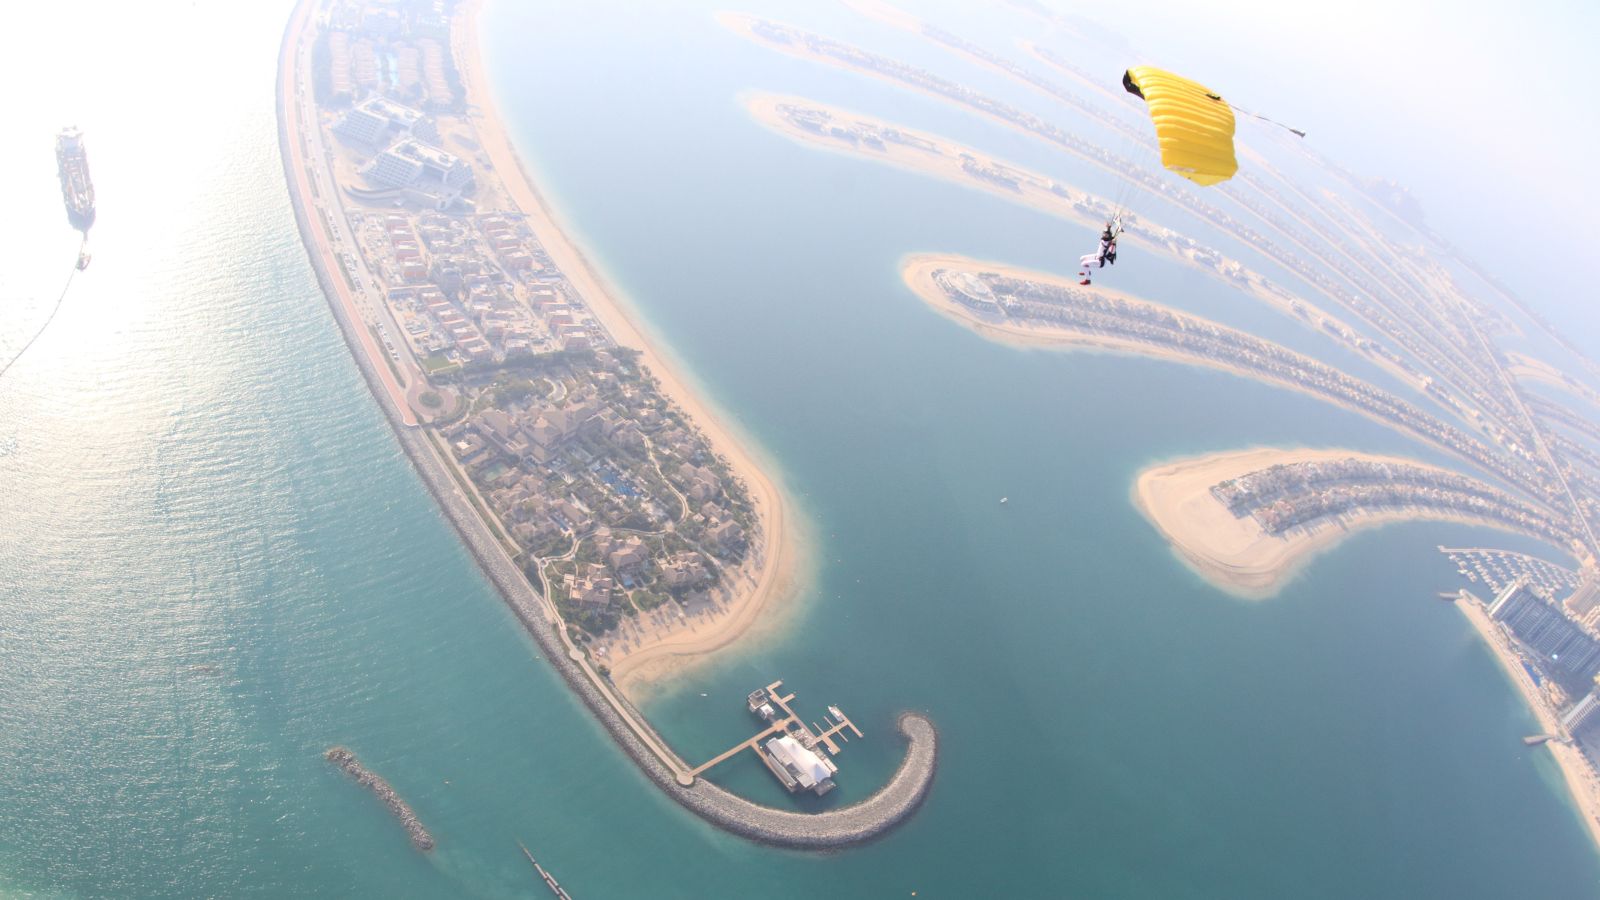 Dubai.Skydive Dubai palm. Beach and city. Skydiver, parashutist under canopy.